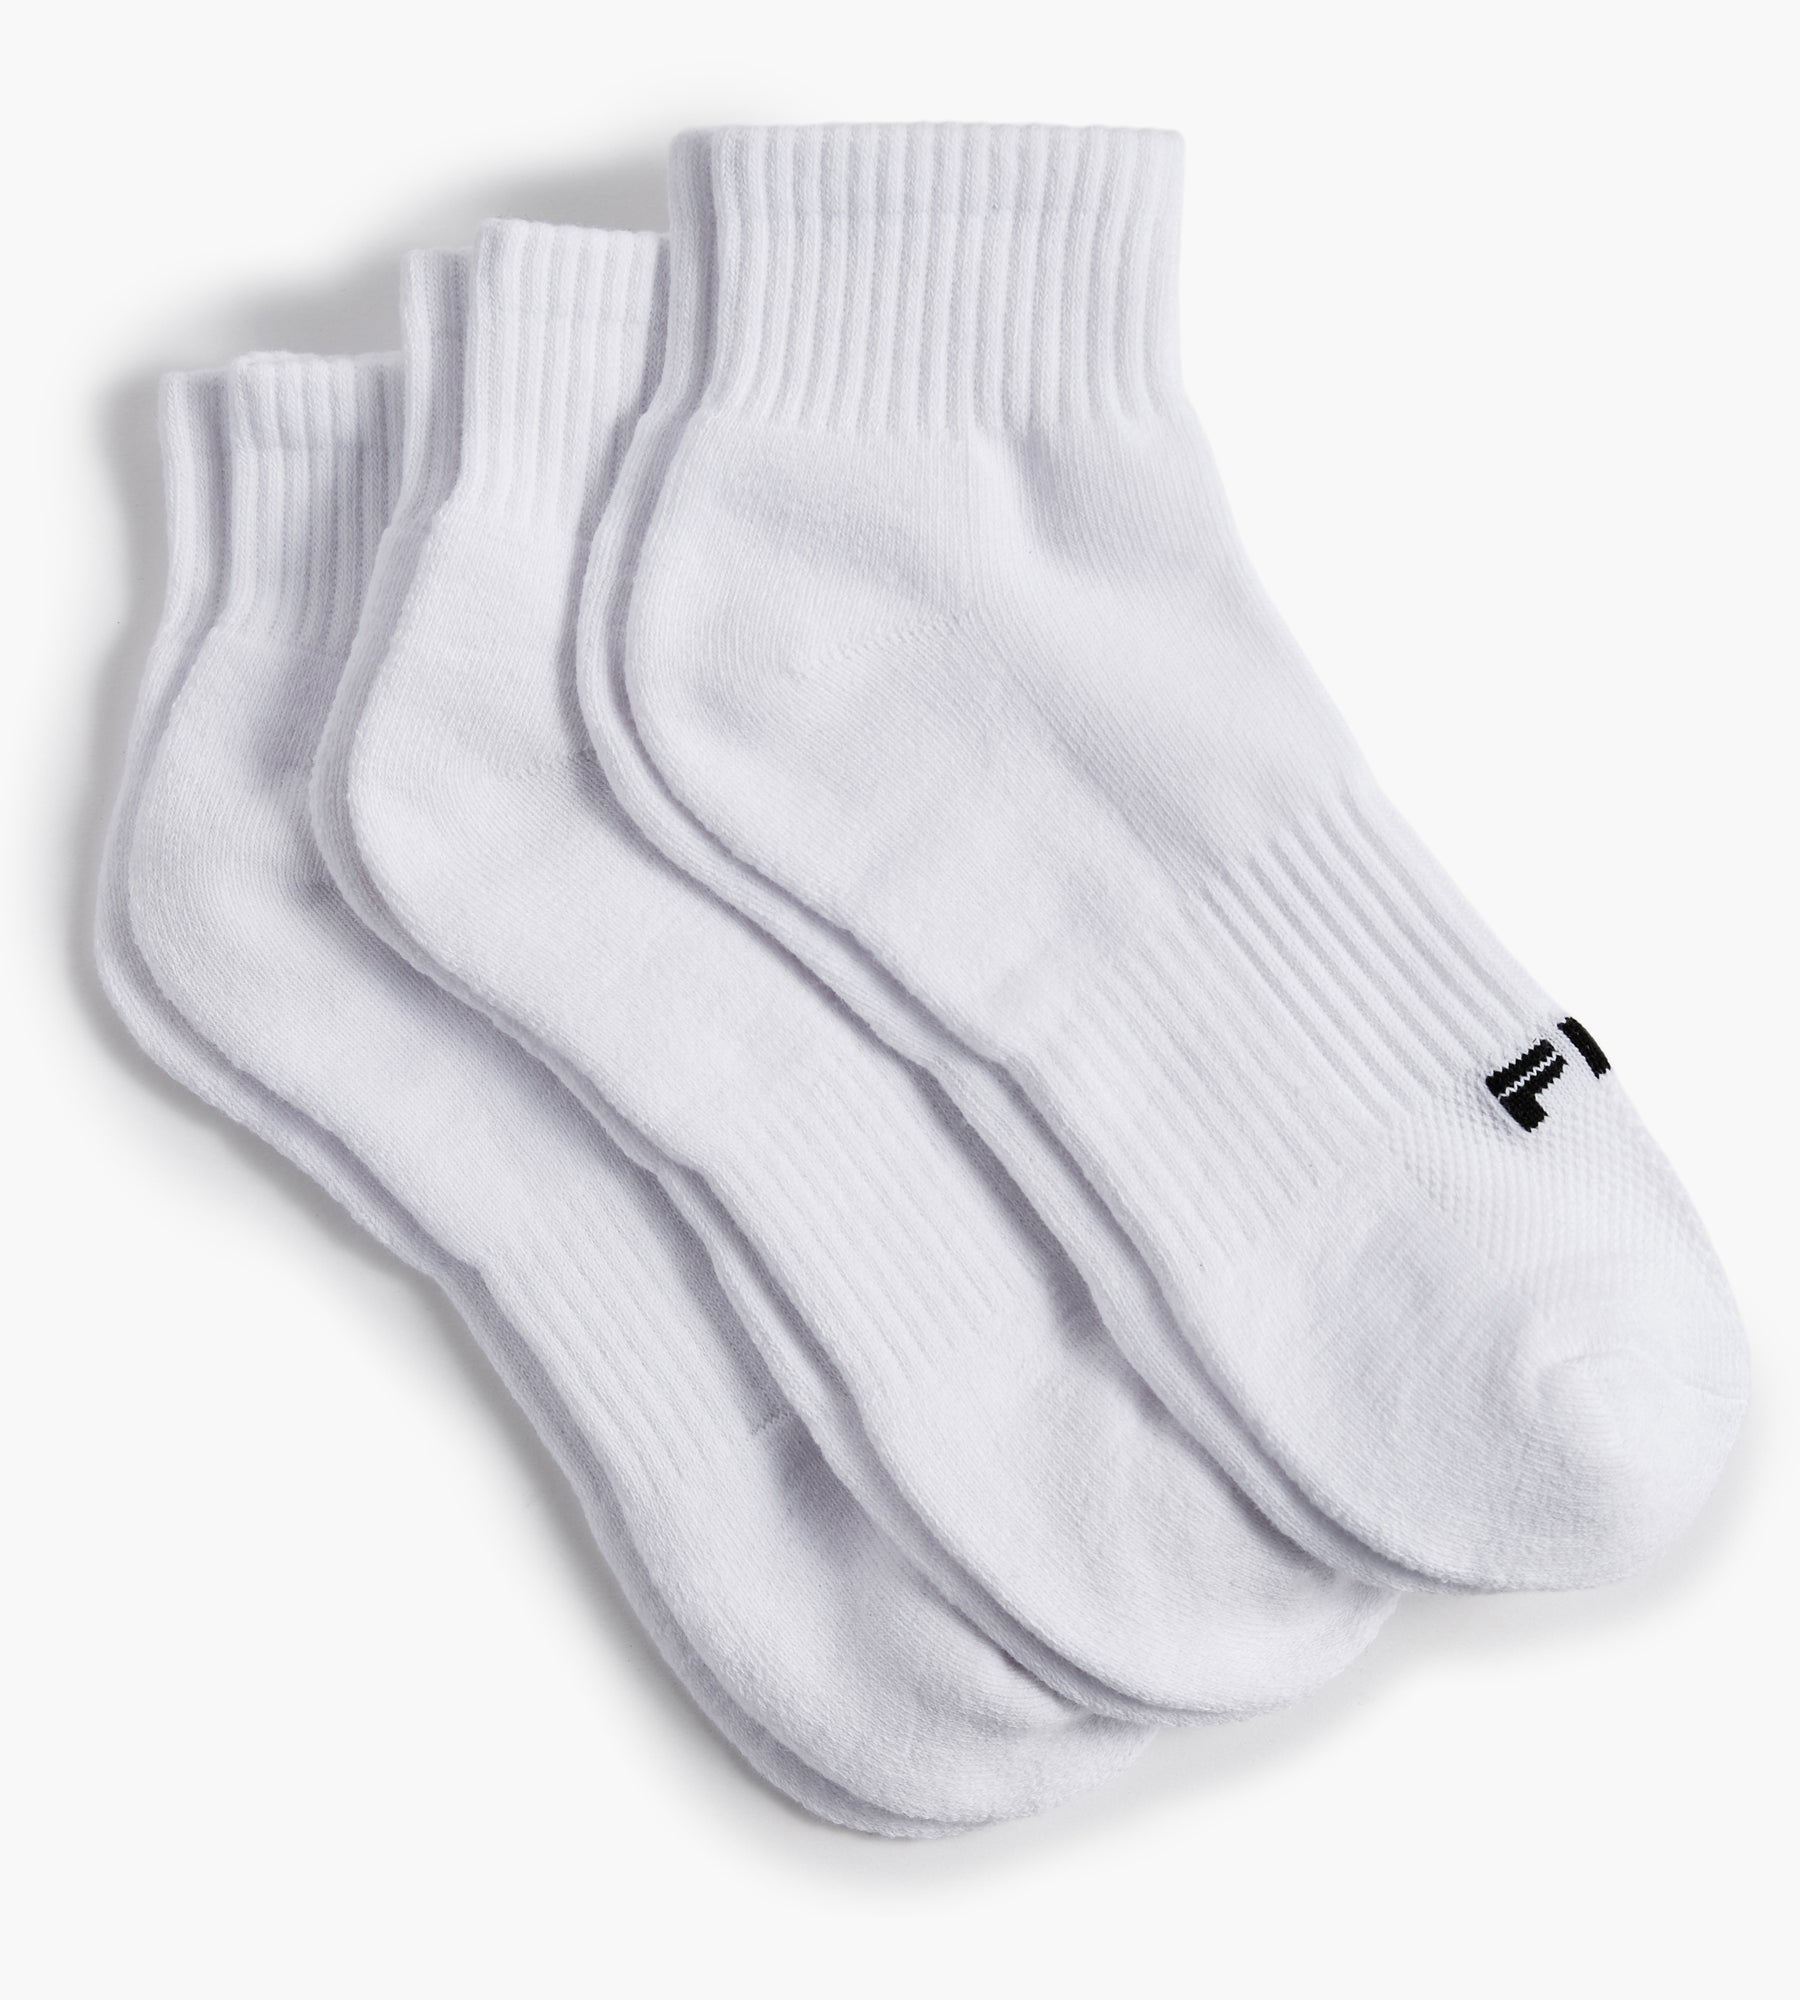 24/7 Cushioned Crew Socks - 3 Pack - White - Performance & Sports